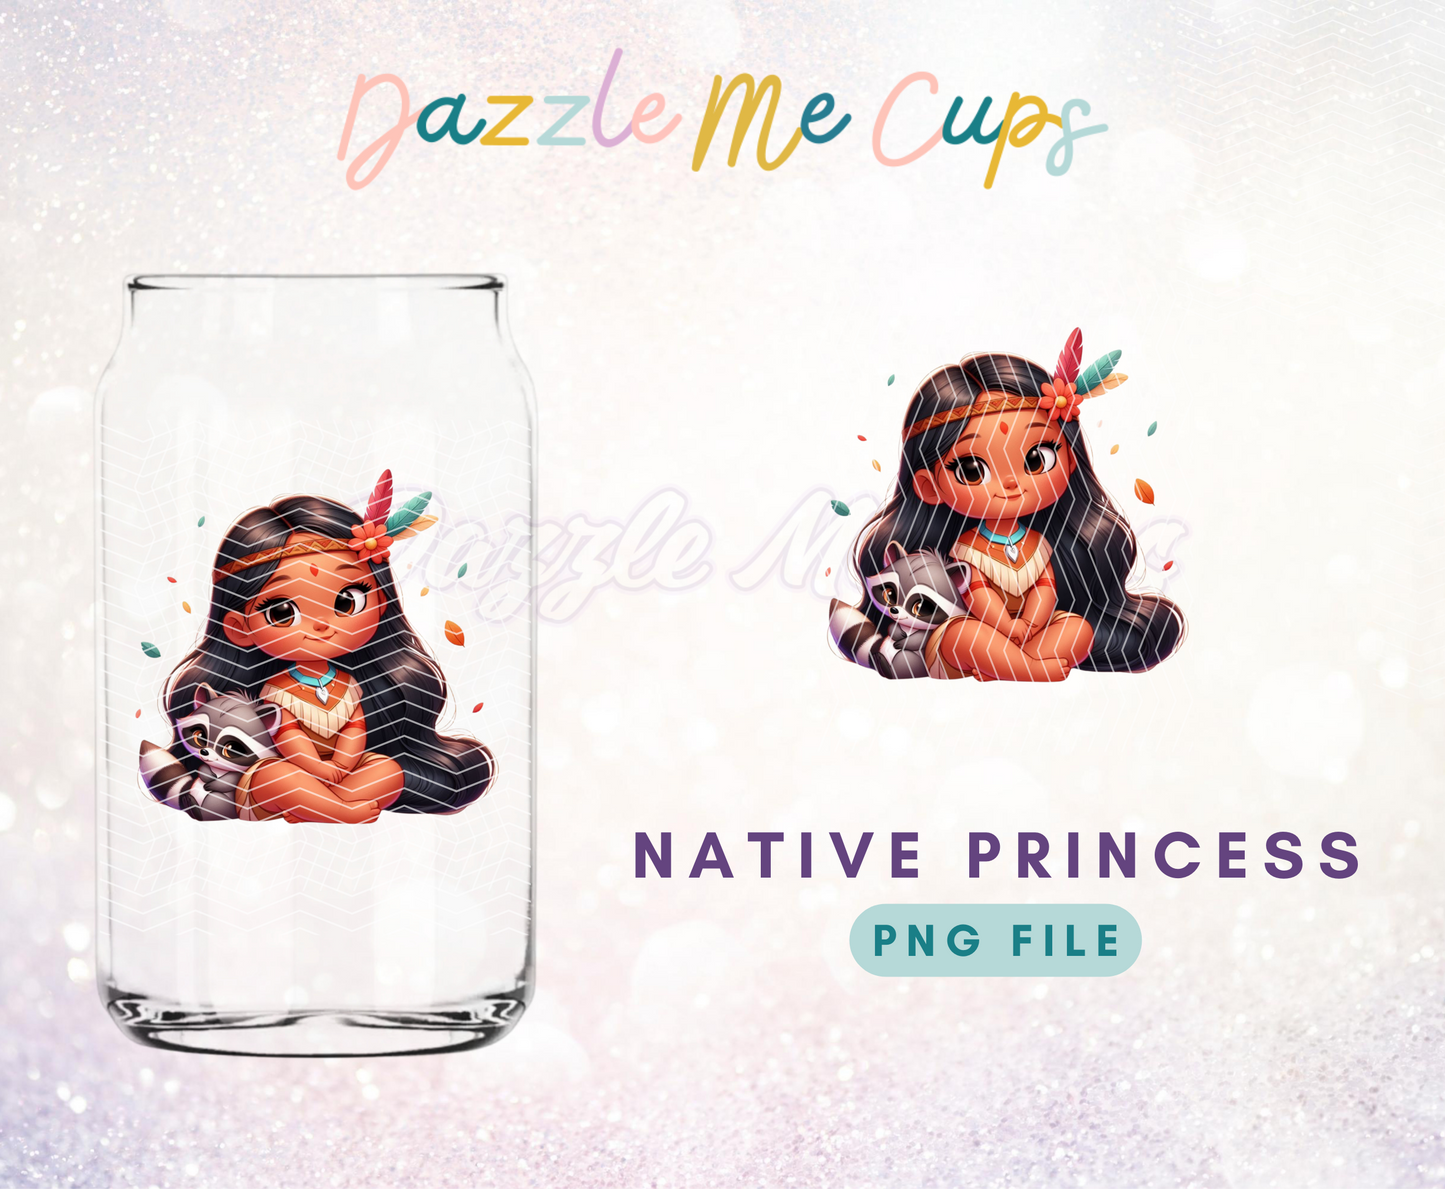 Native princess PNG